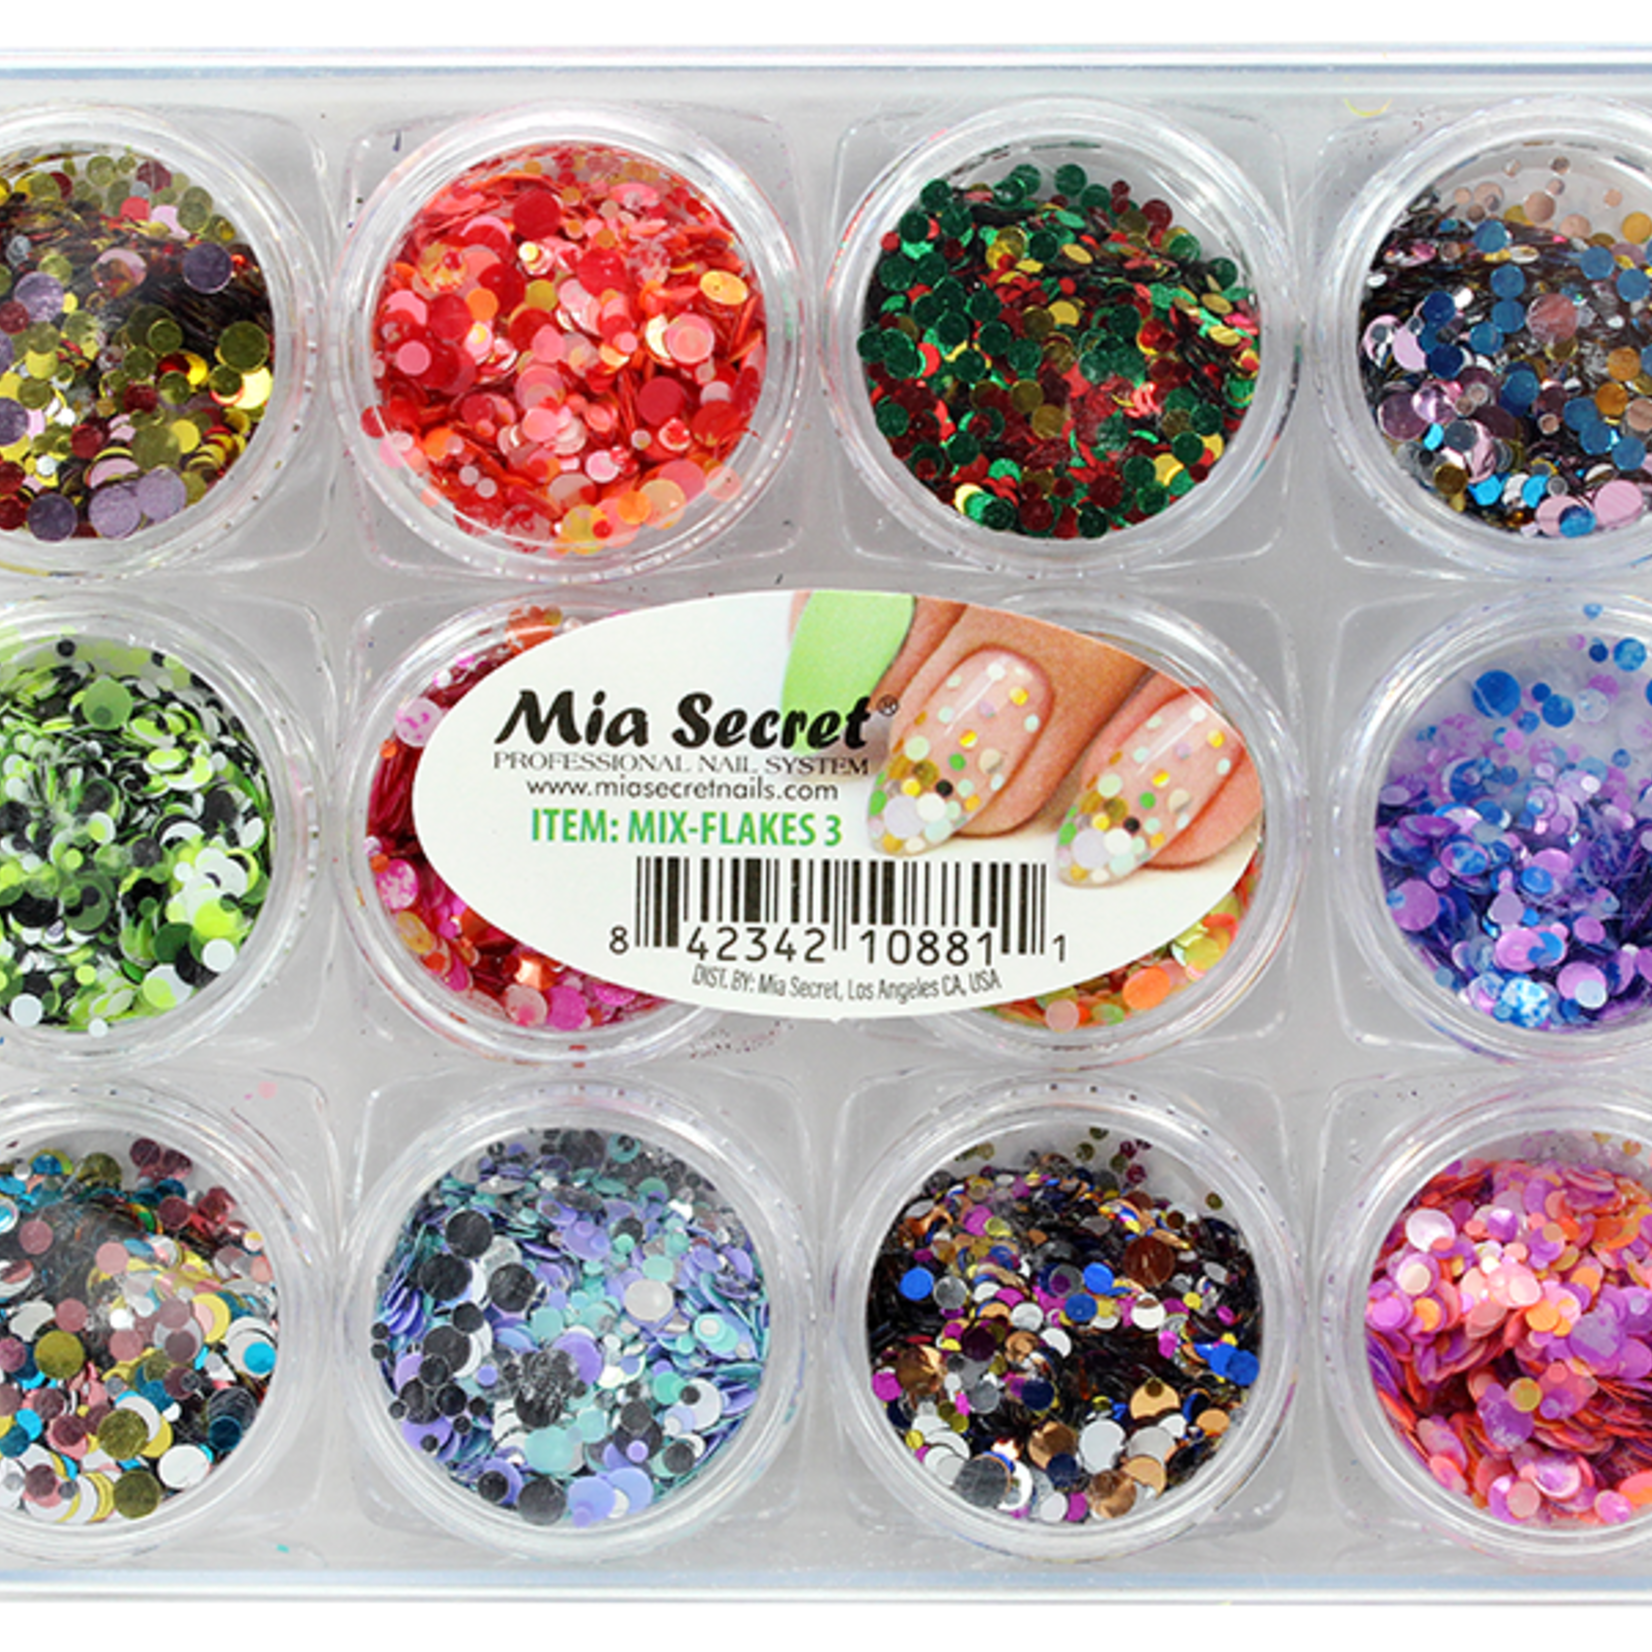 Mia Secret Mia Secret - Nail Art Mix Flakes 3 - 12 ct